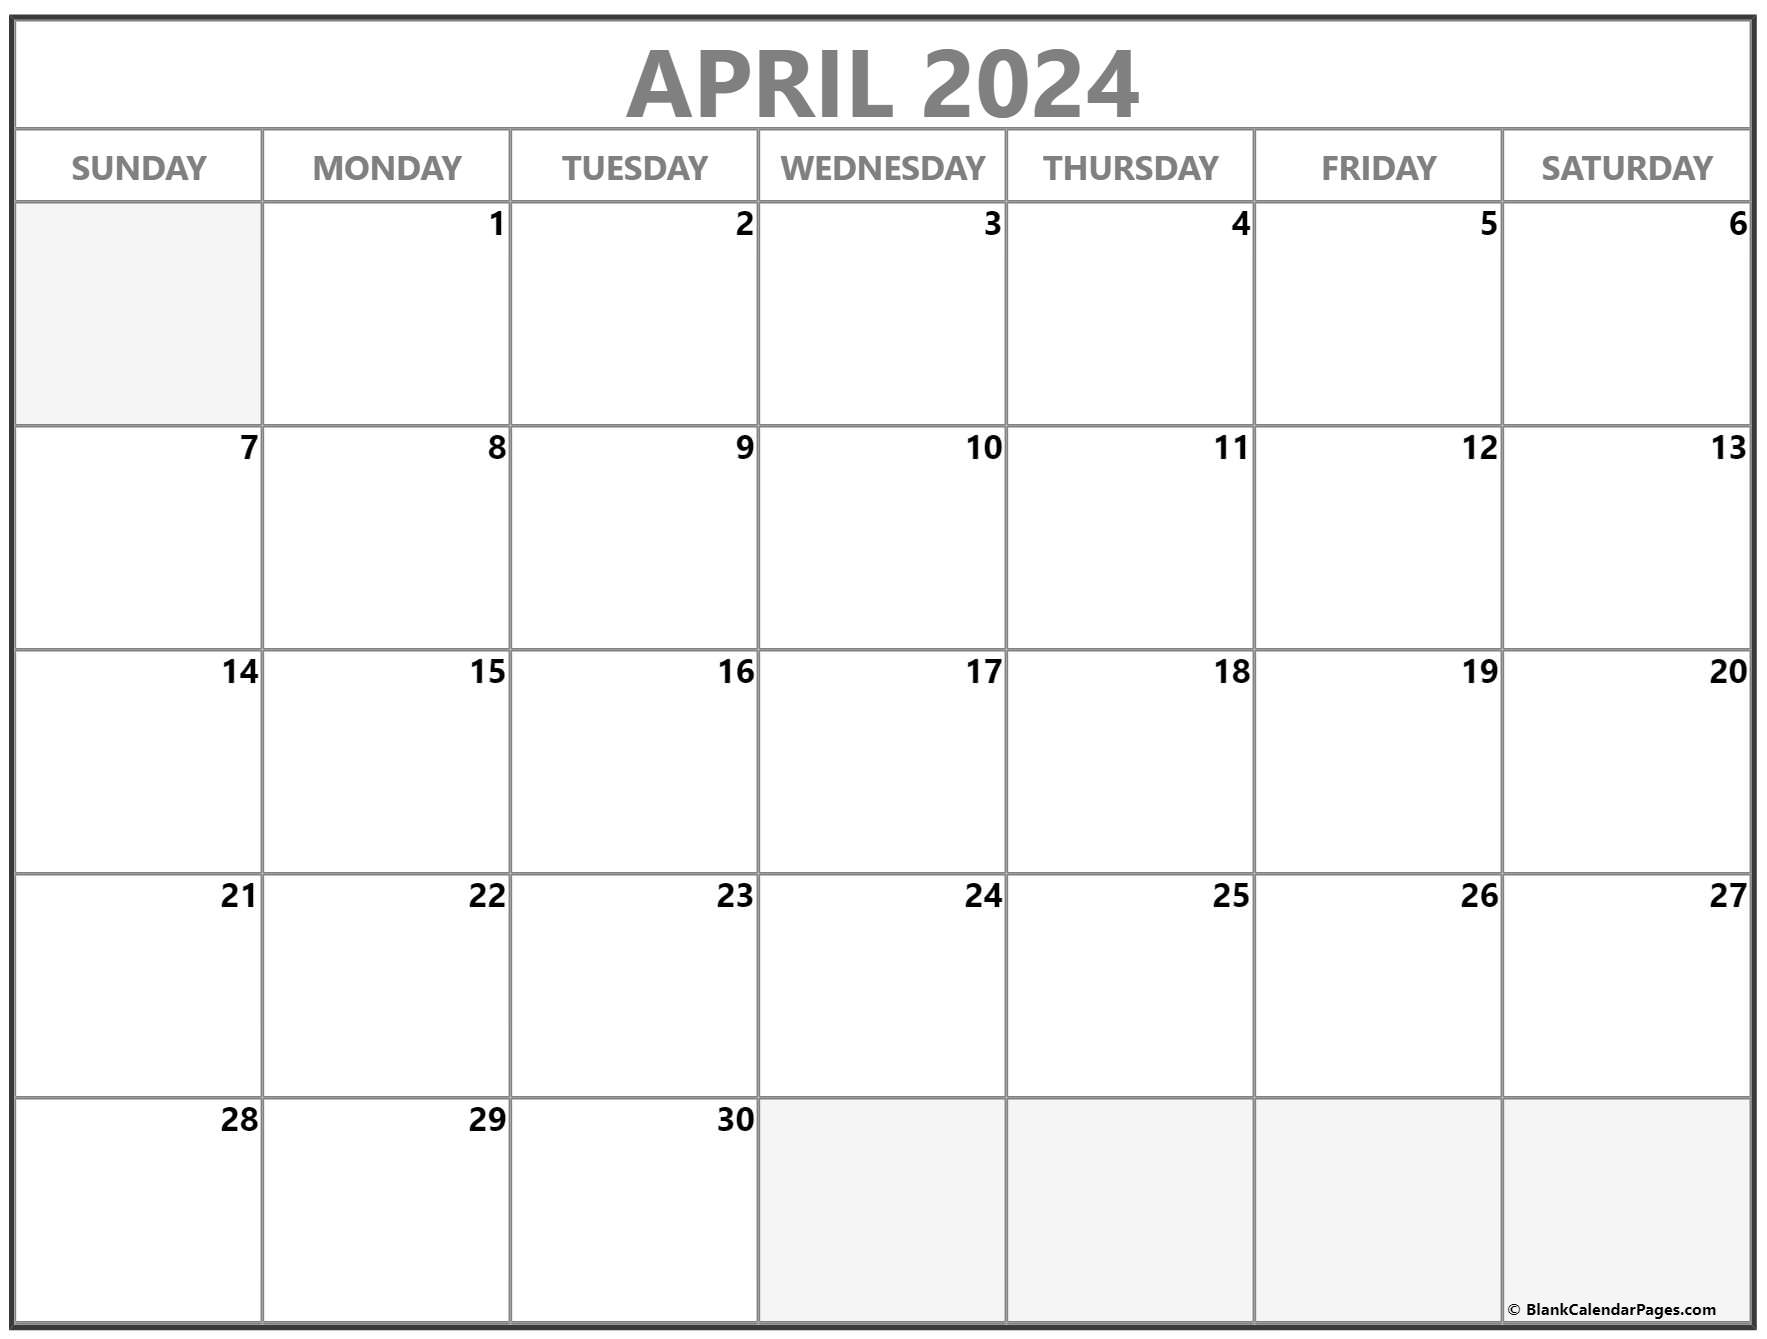 April 2024 Calendar Free Printable Calendar | Free Printable Calendar April 2024 Pdf